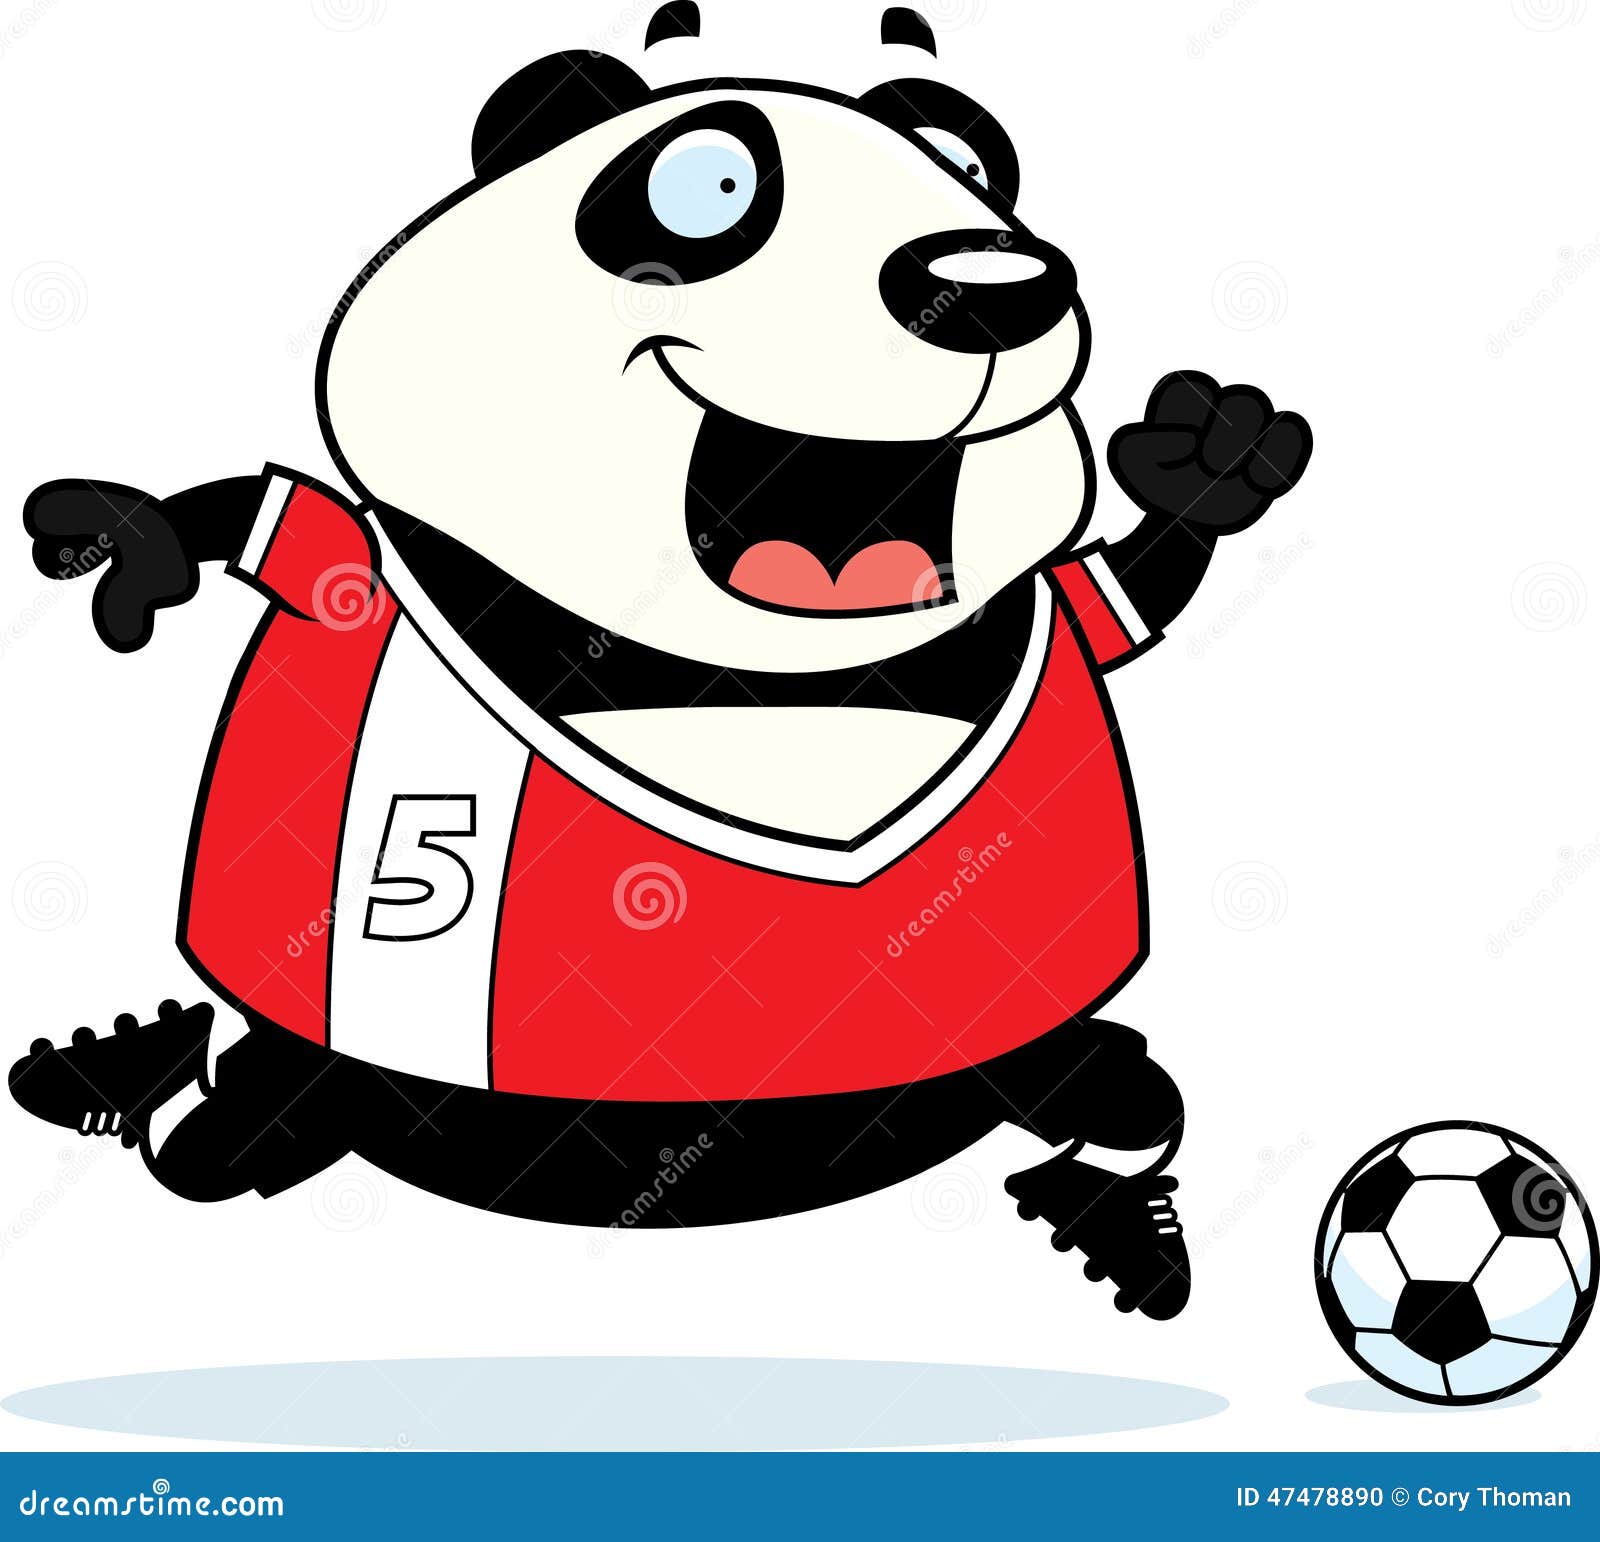 clipart panda football - photo #43